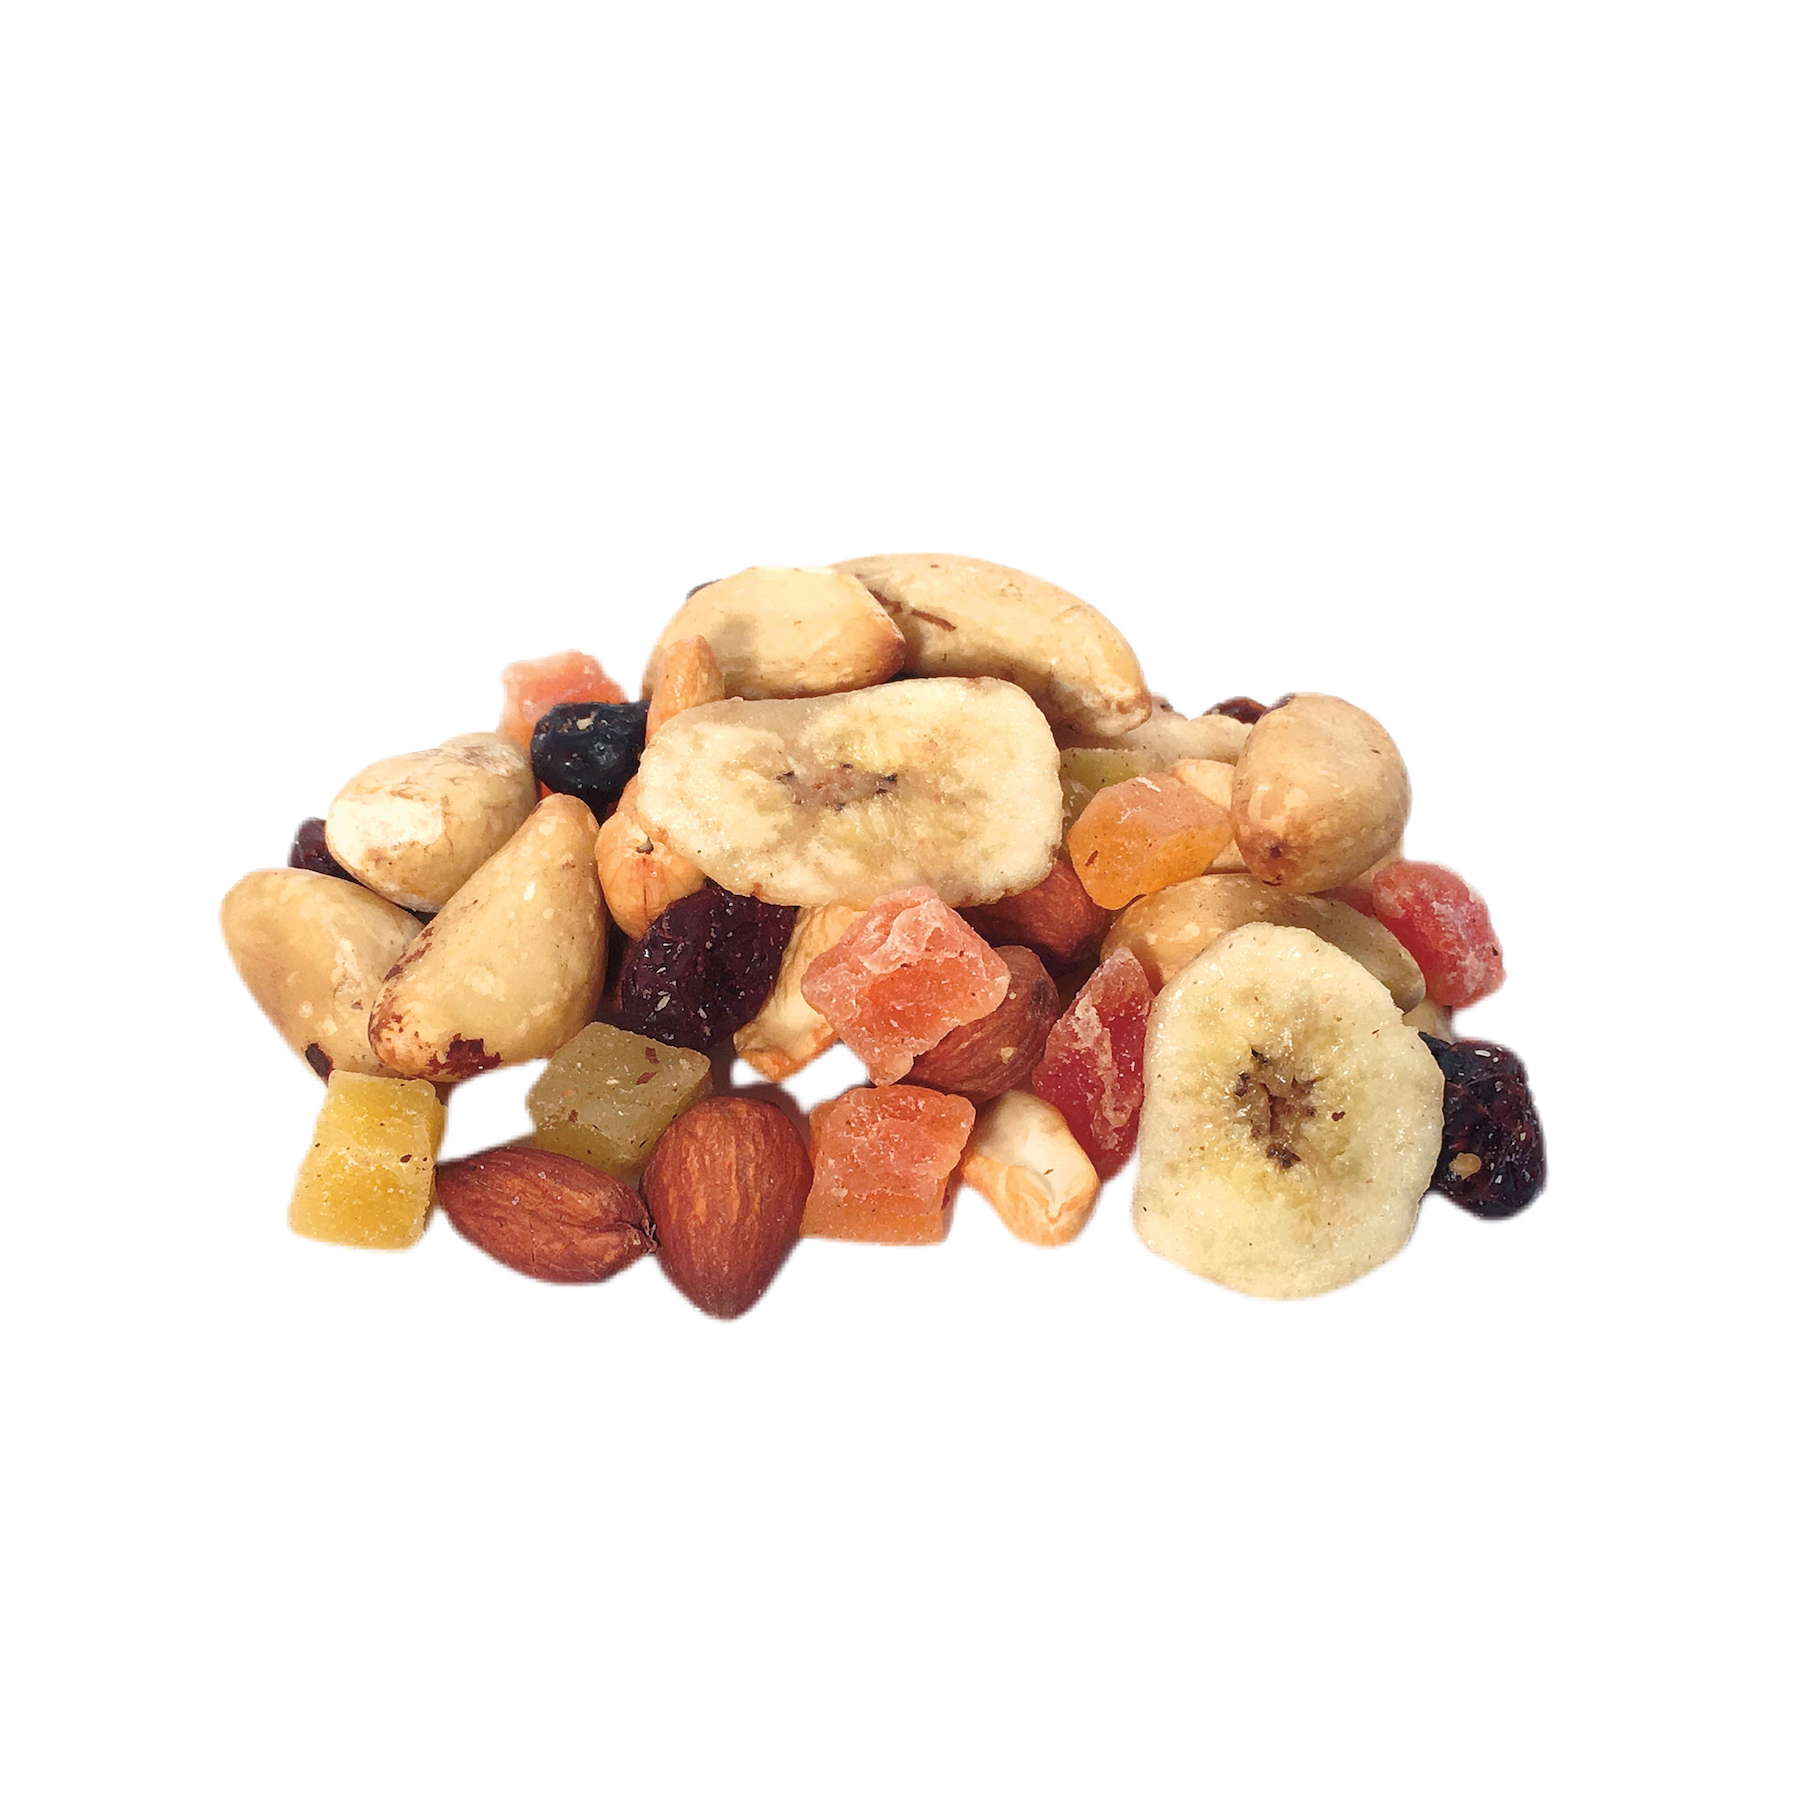 Baked Nuts & Fruit Hexagonal Jar - The Dormen Food Company